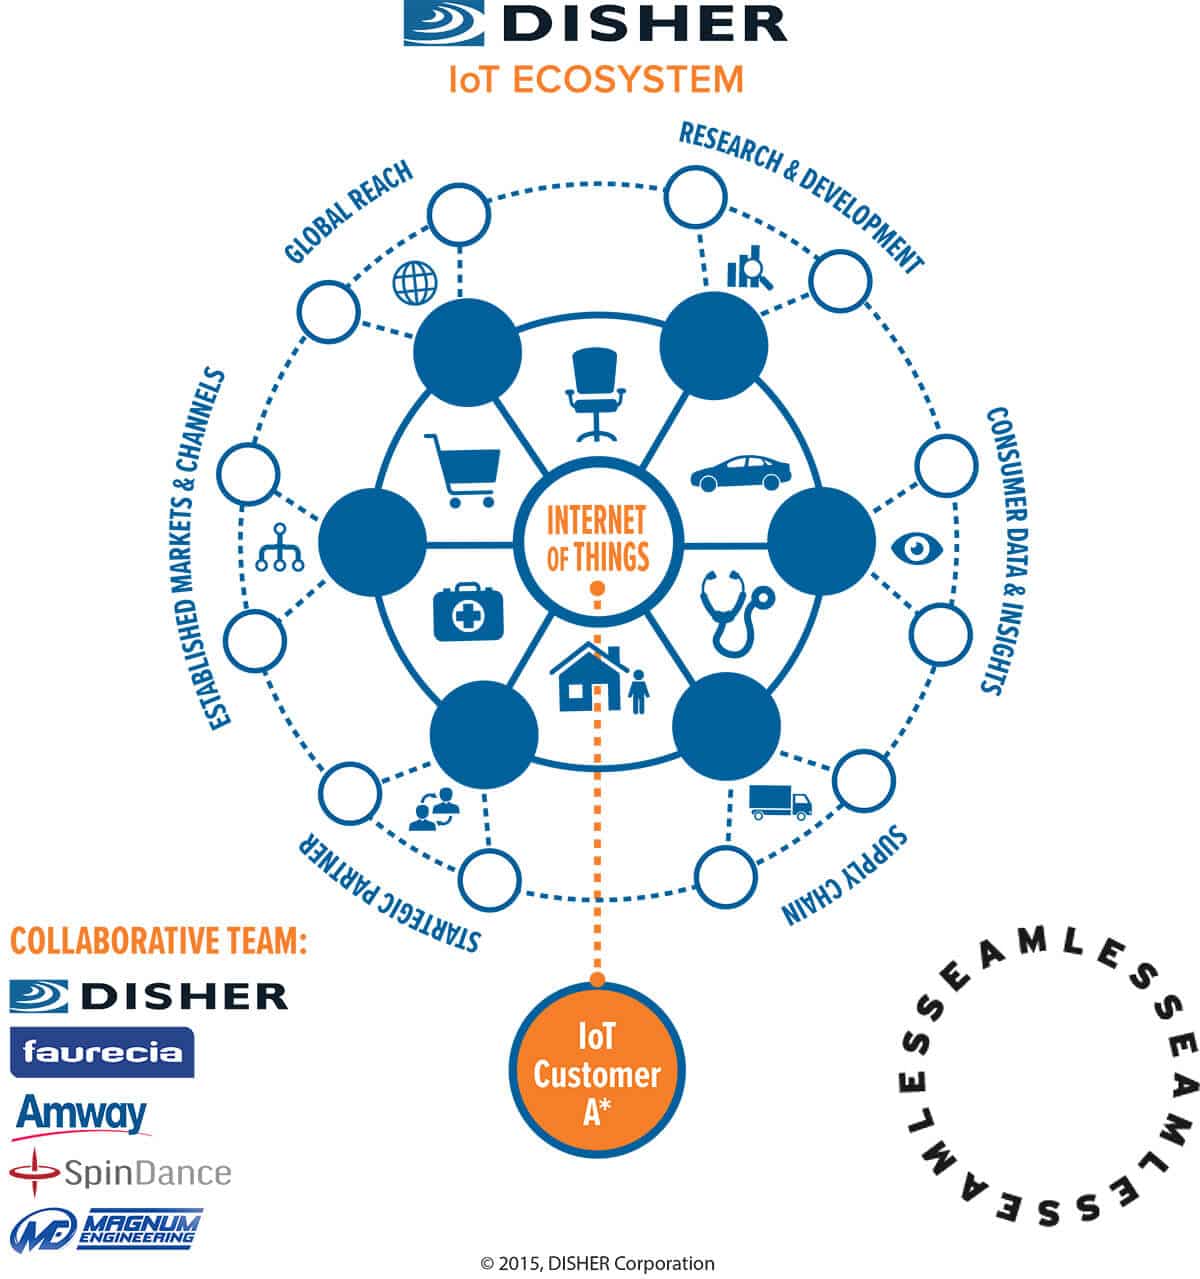 disher-iot-ecosystem